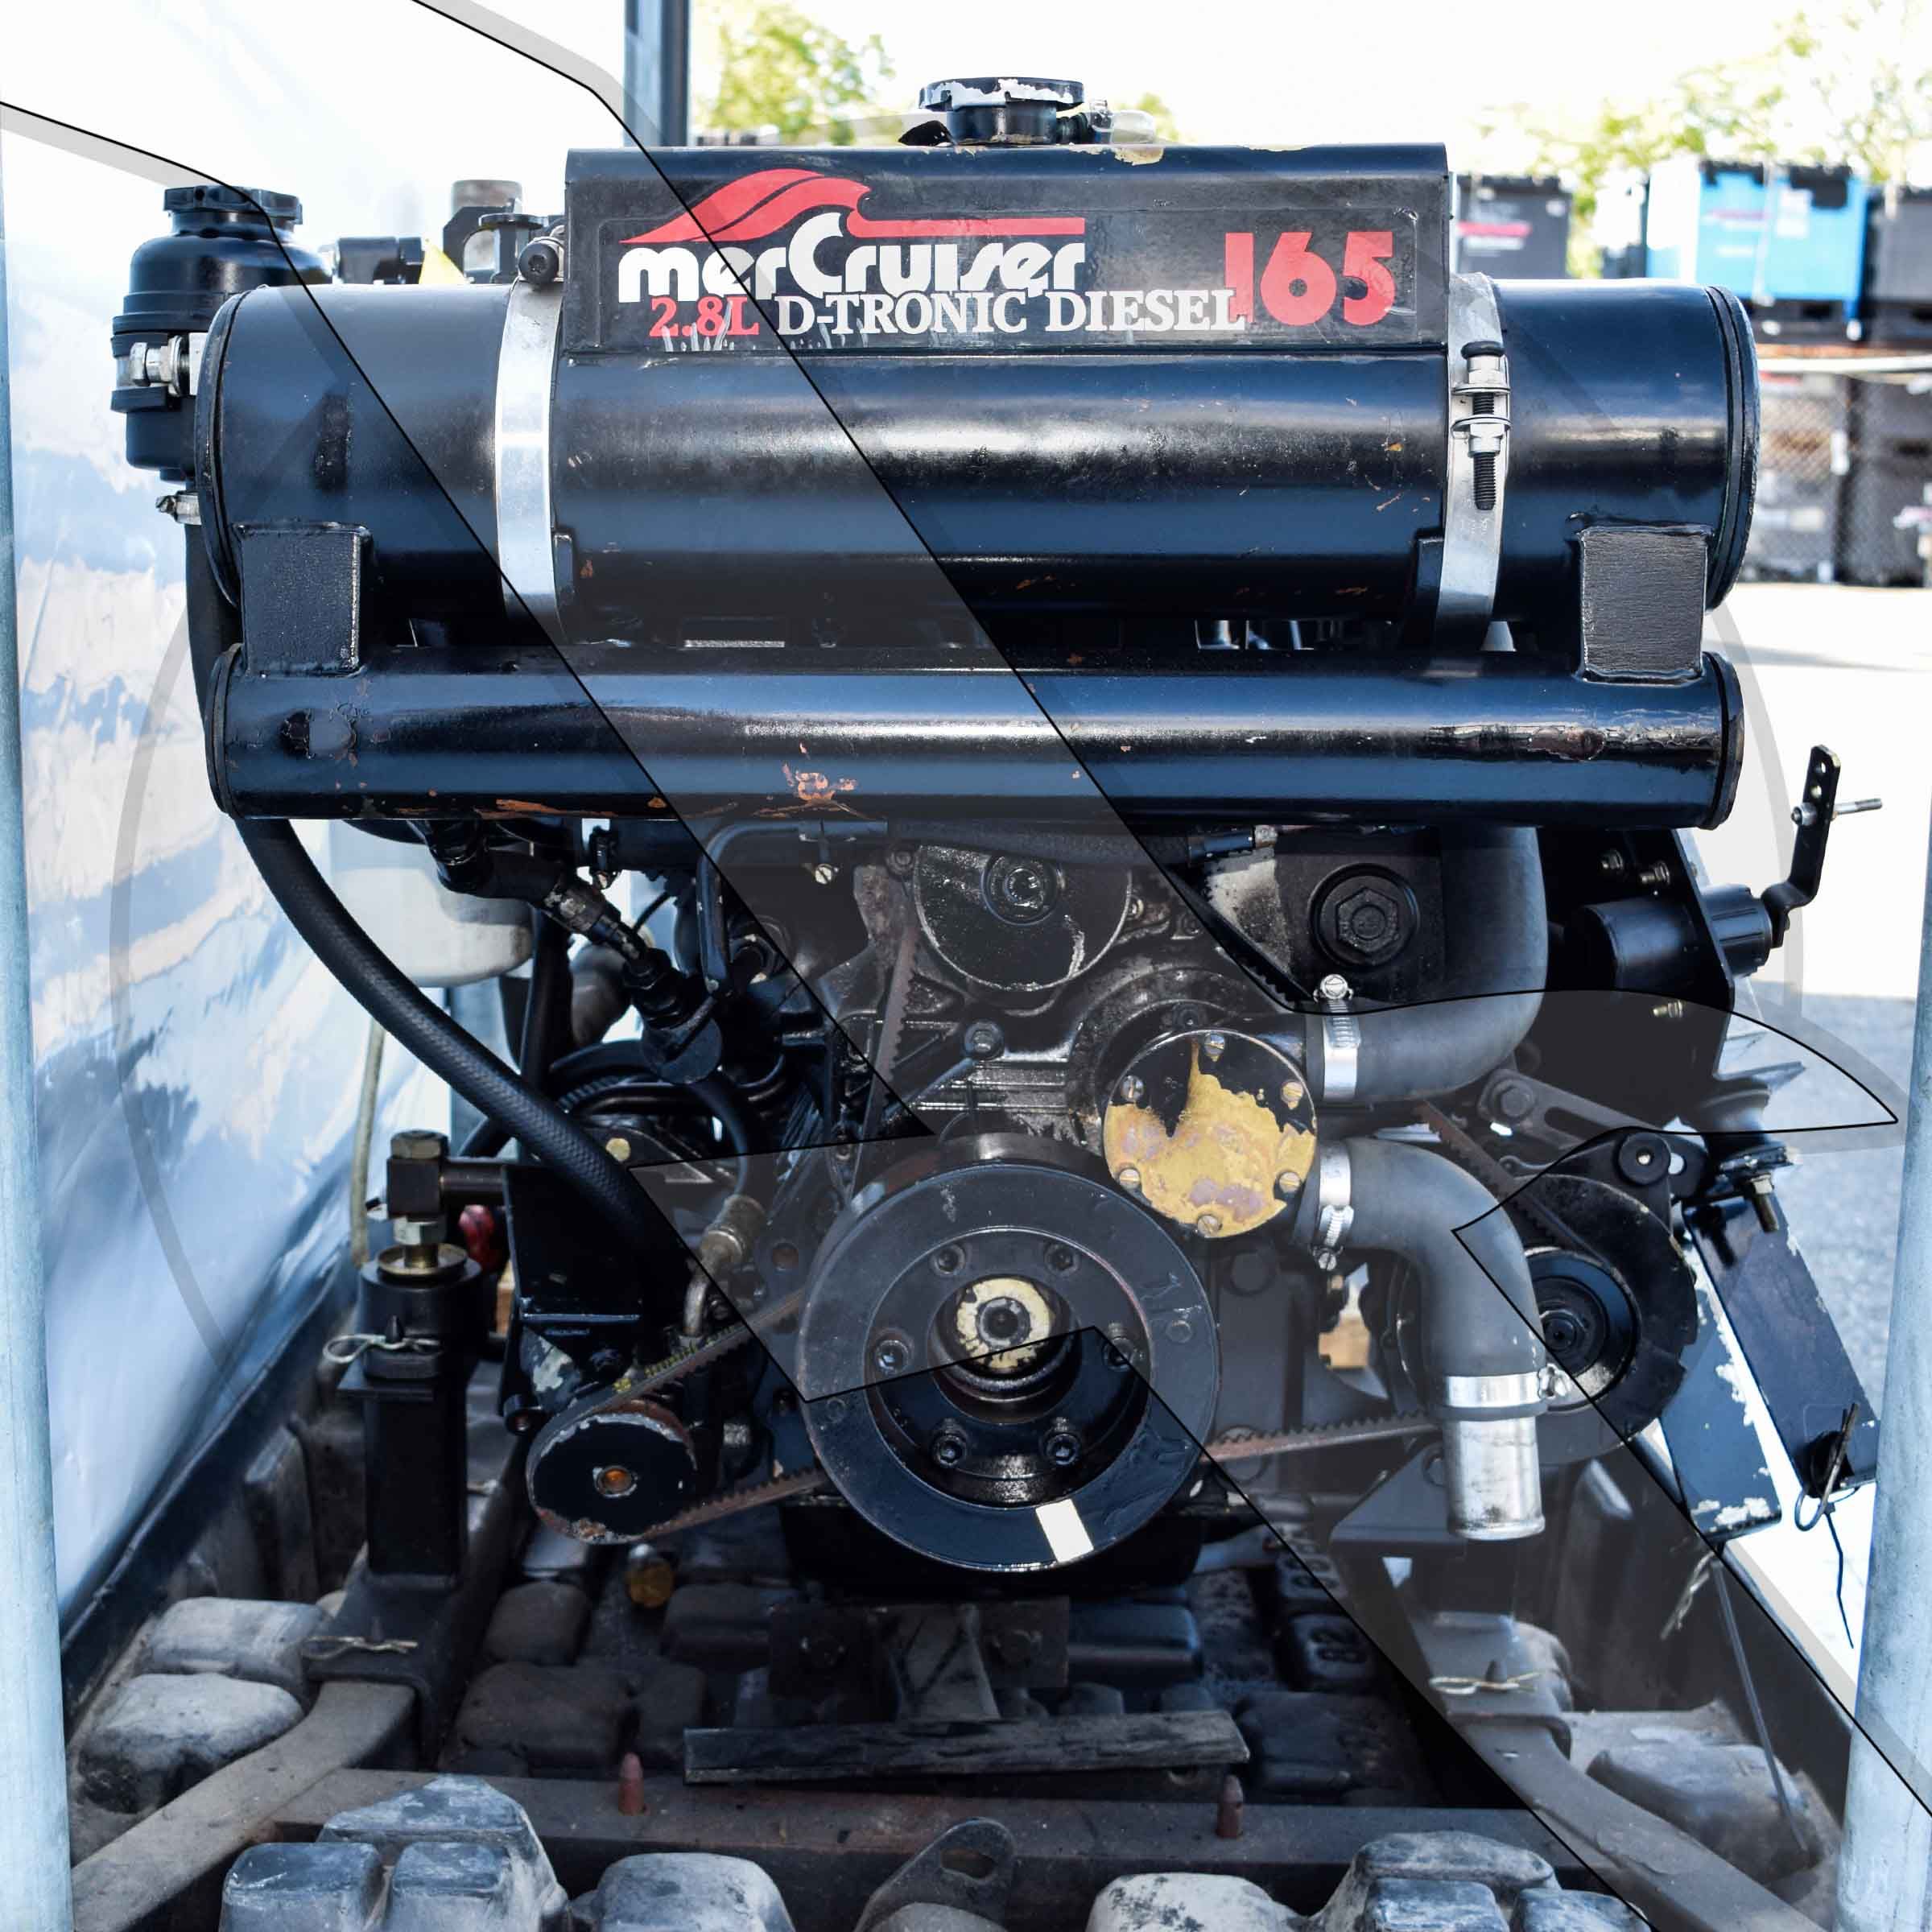 Mercruiser 2.8L 169ci D-Tronic Diesel Engine.